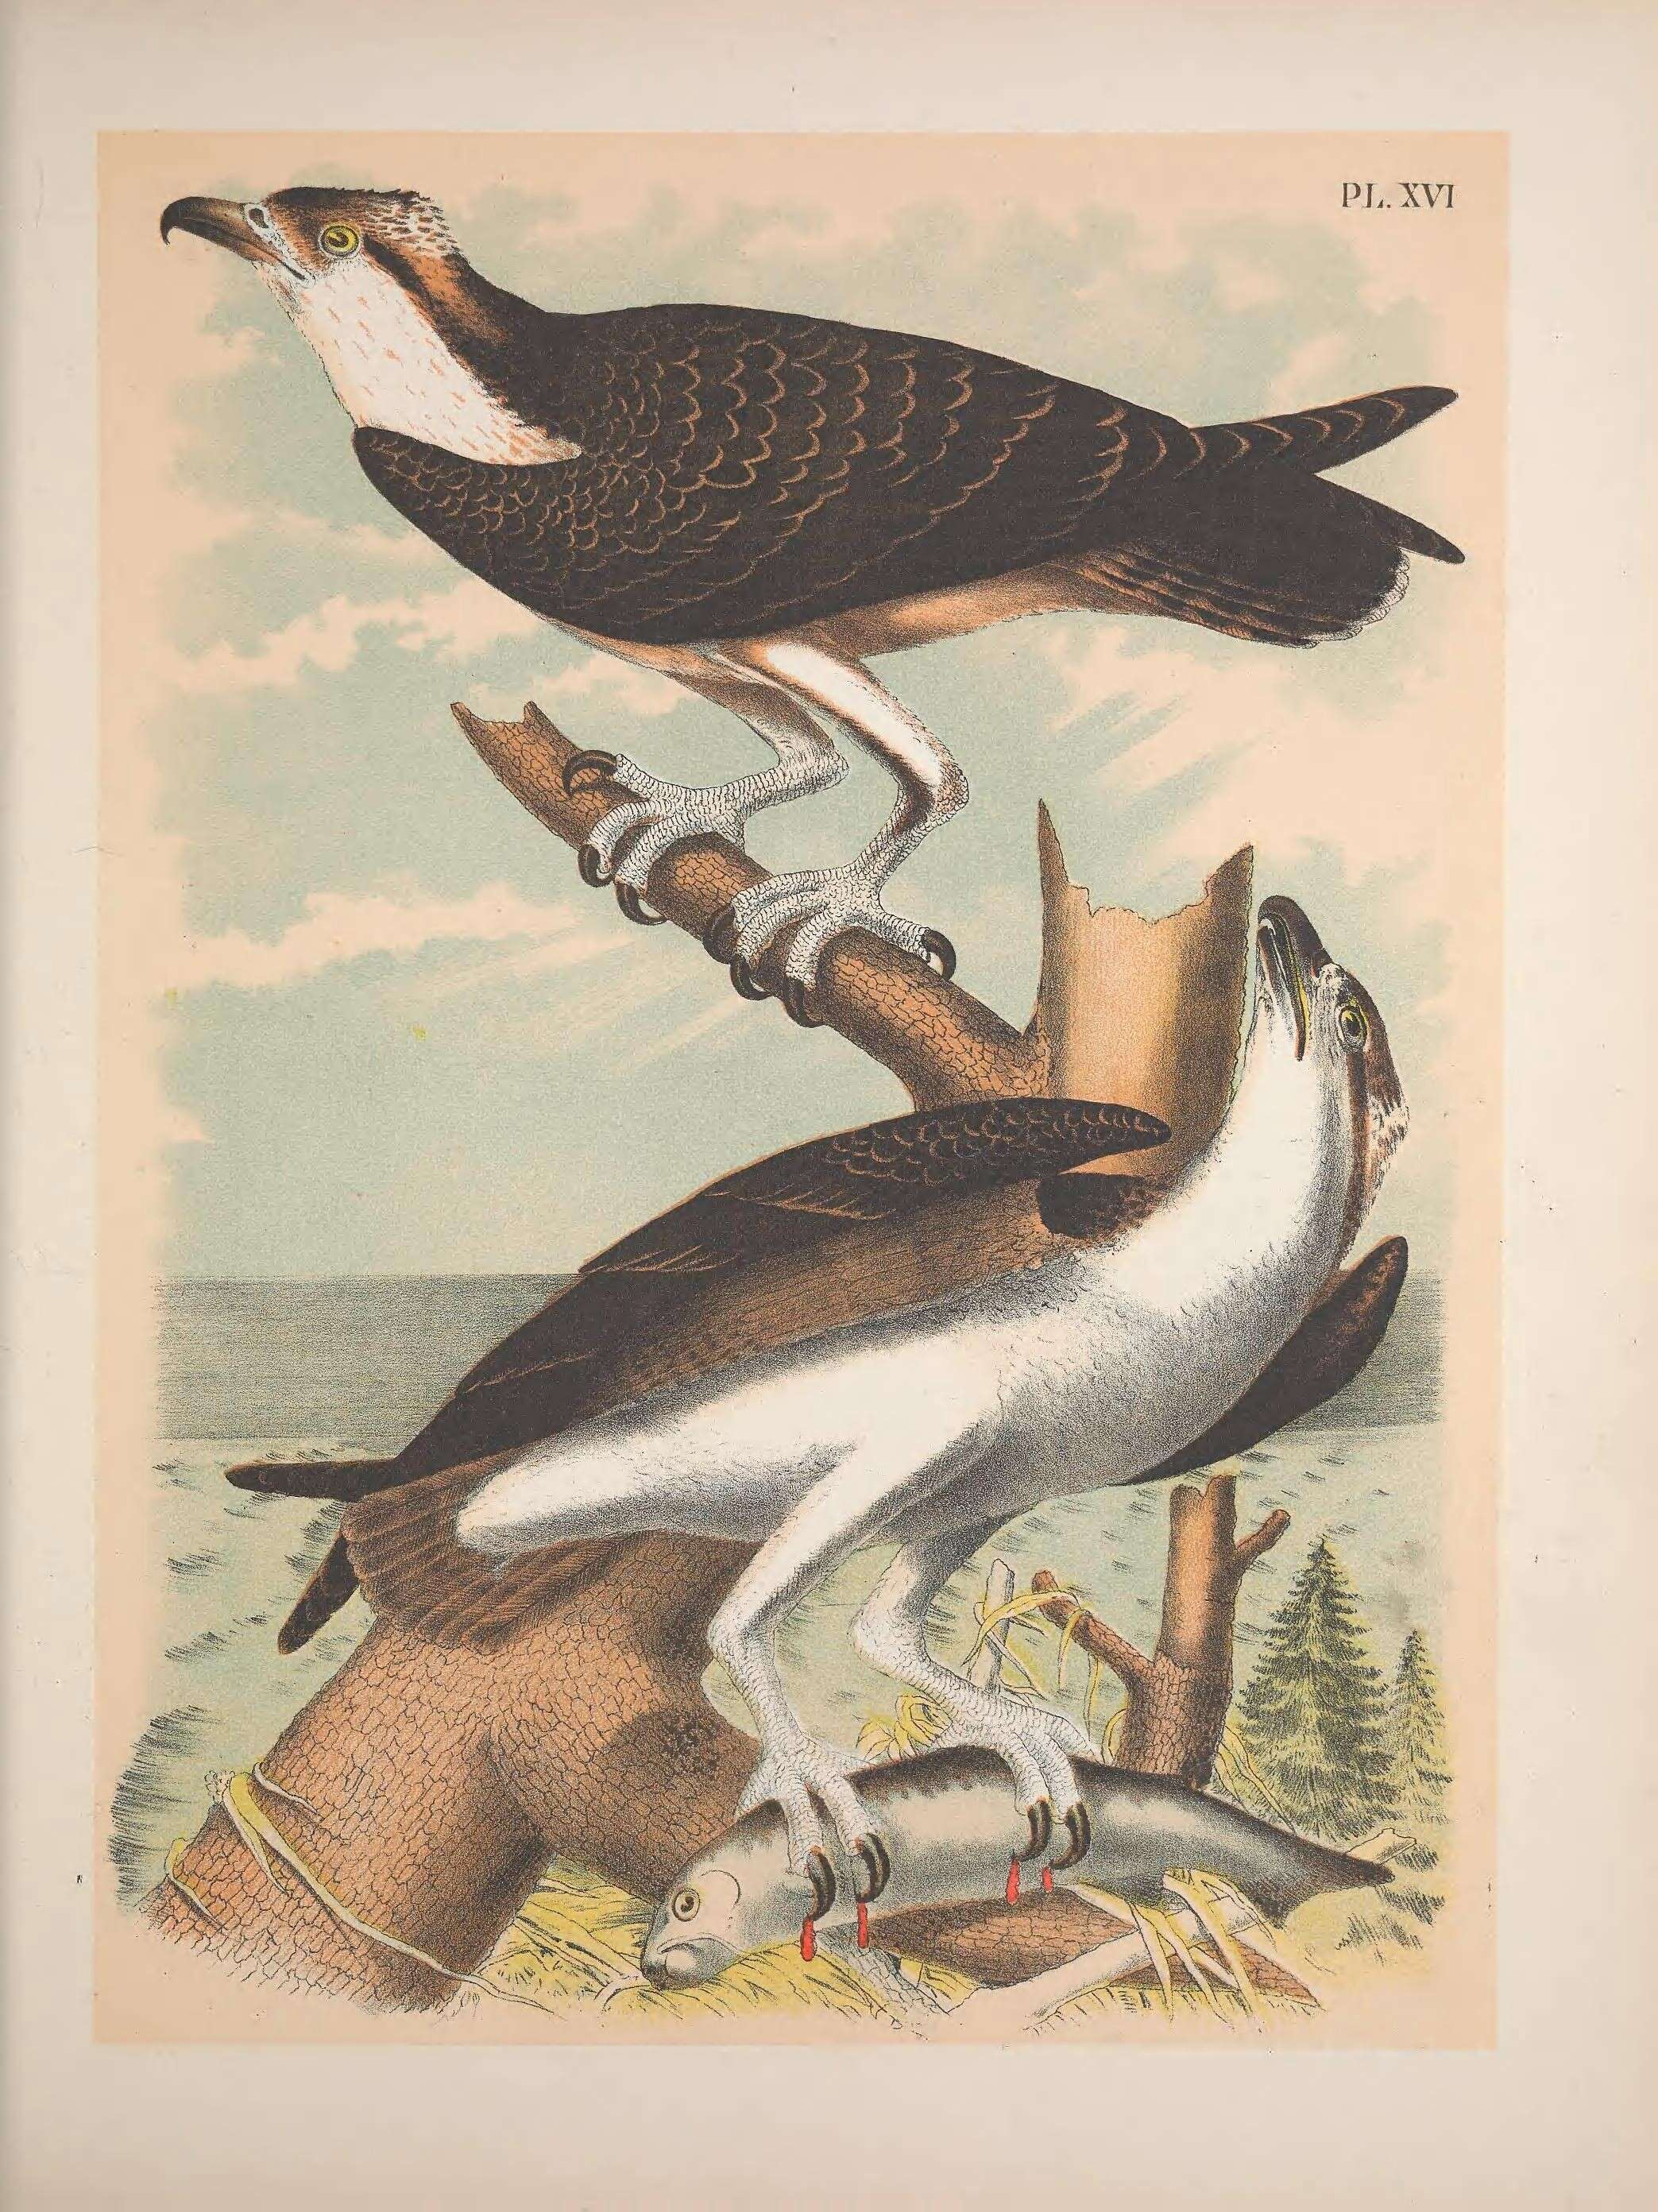 Image of ospreys